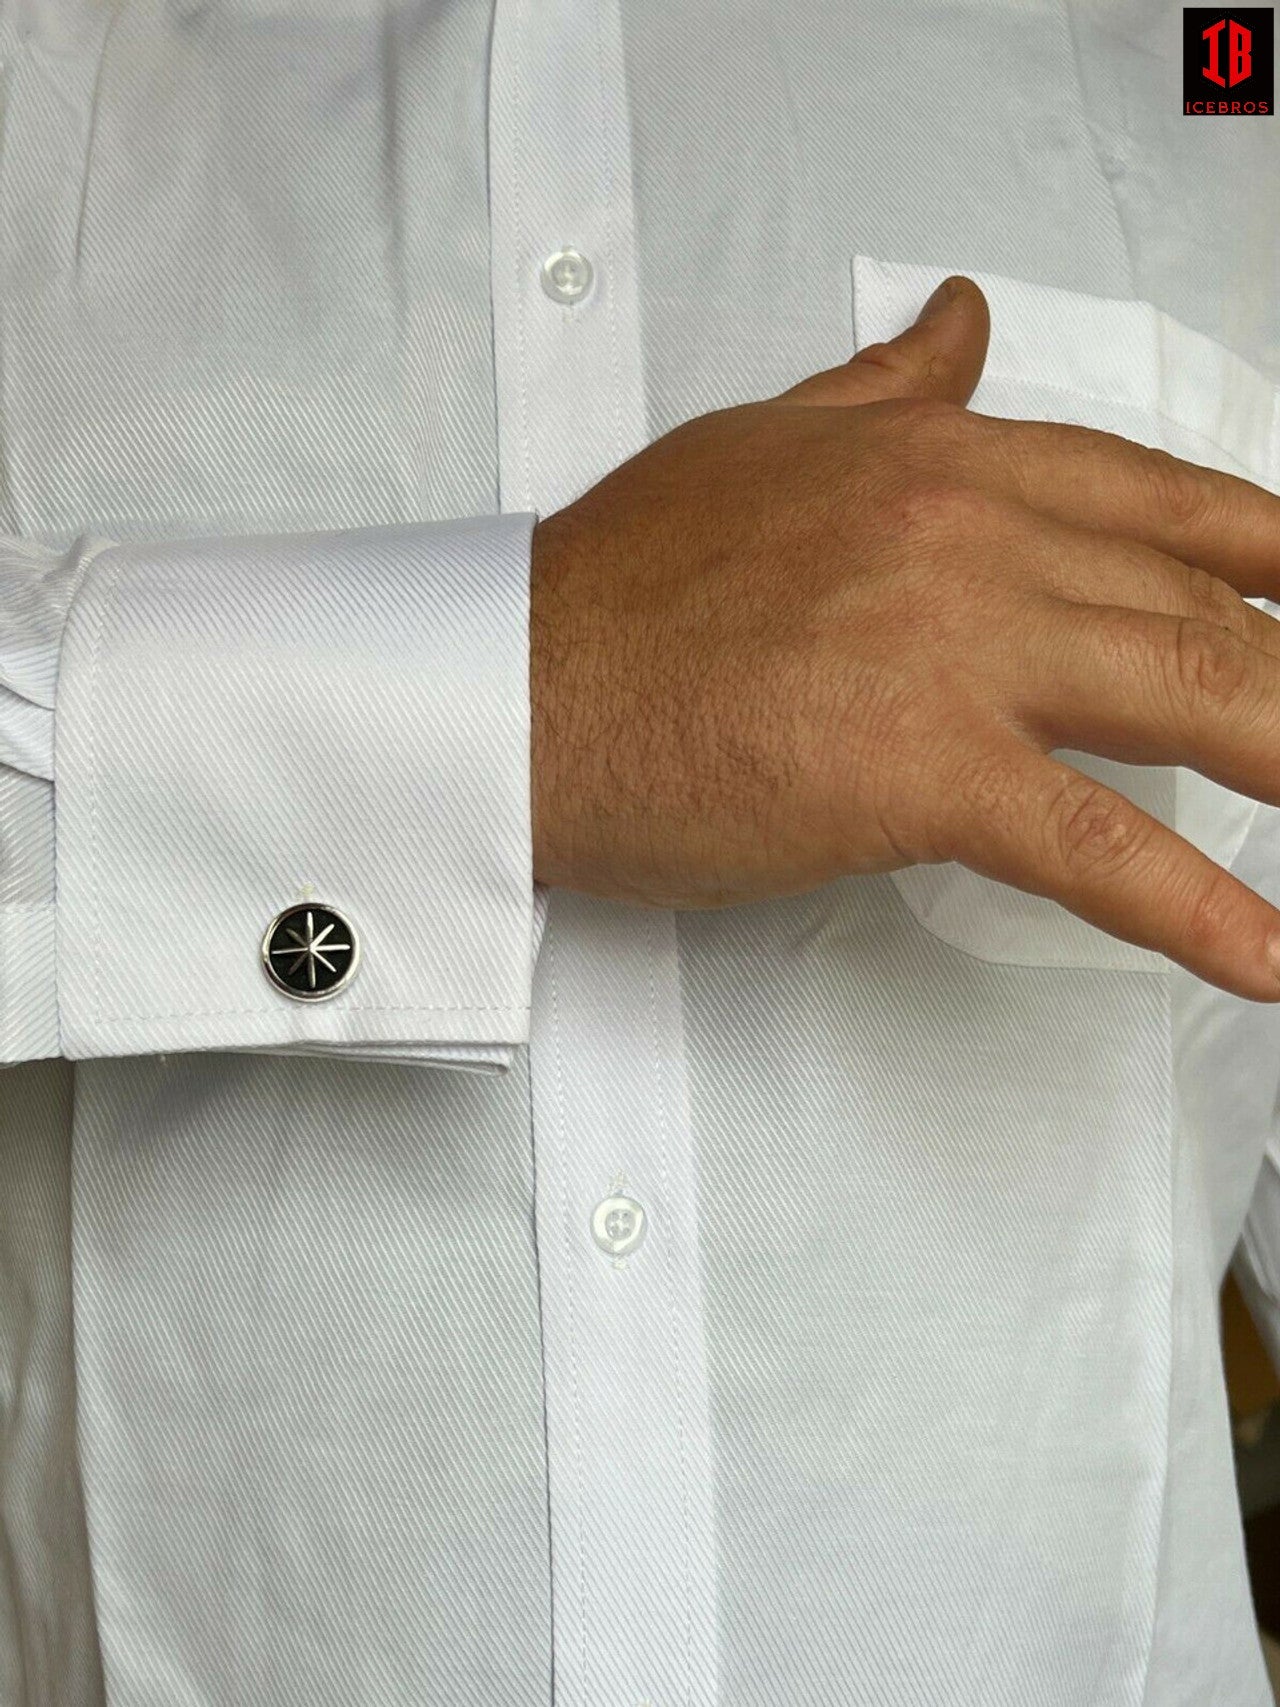 Real 925 Sterling Silver Black Navigation Star Cuff Links Cufflinks Tuxedo Shirt